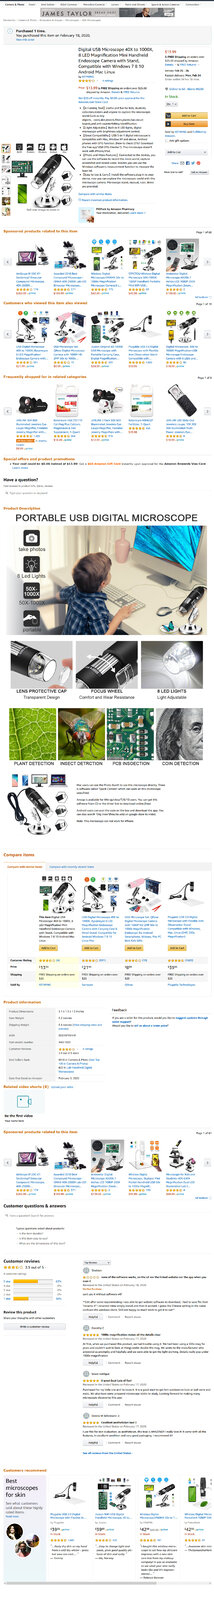 Screenshot_2020-02-20 Amazon com Digital USB Microscope 40X to 1000X, 8 LED Magnification Mini...jpg